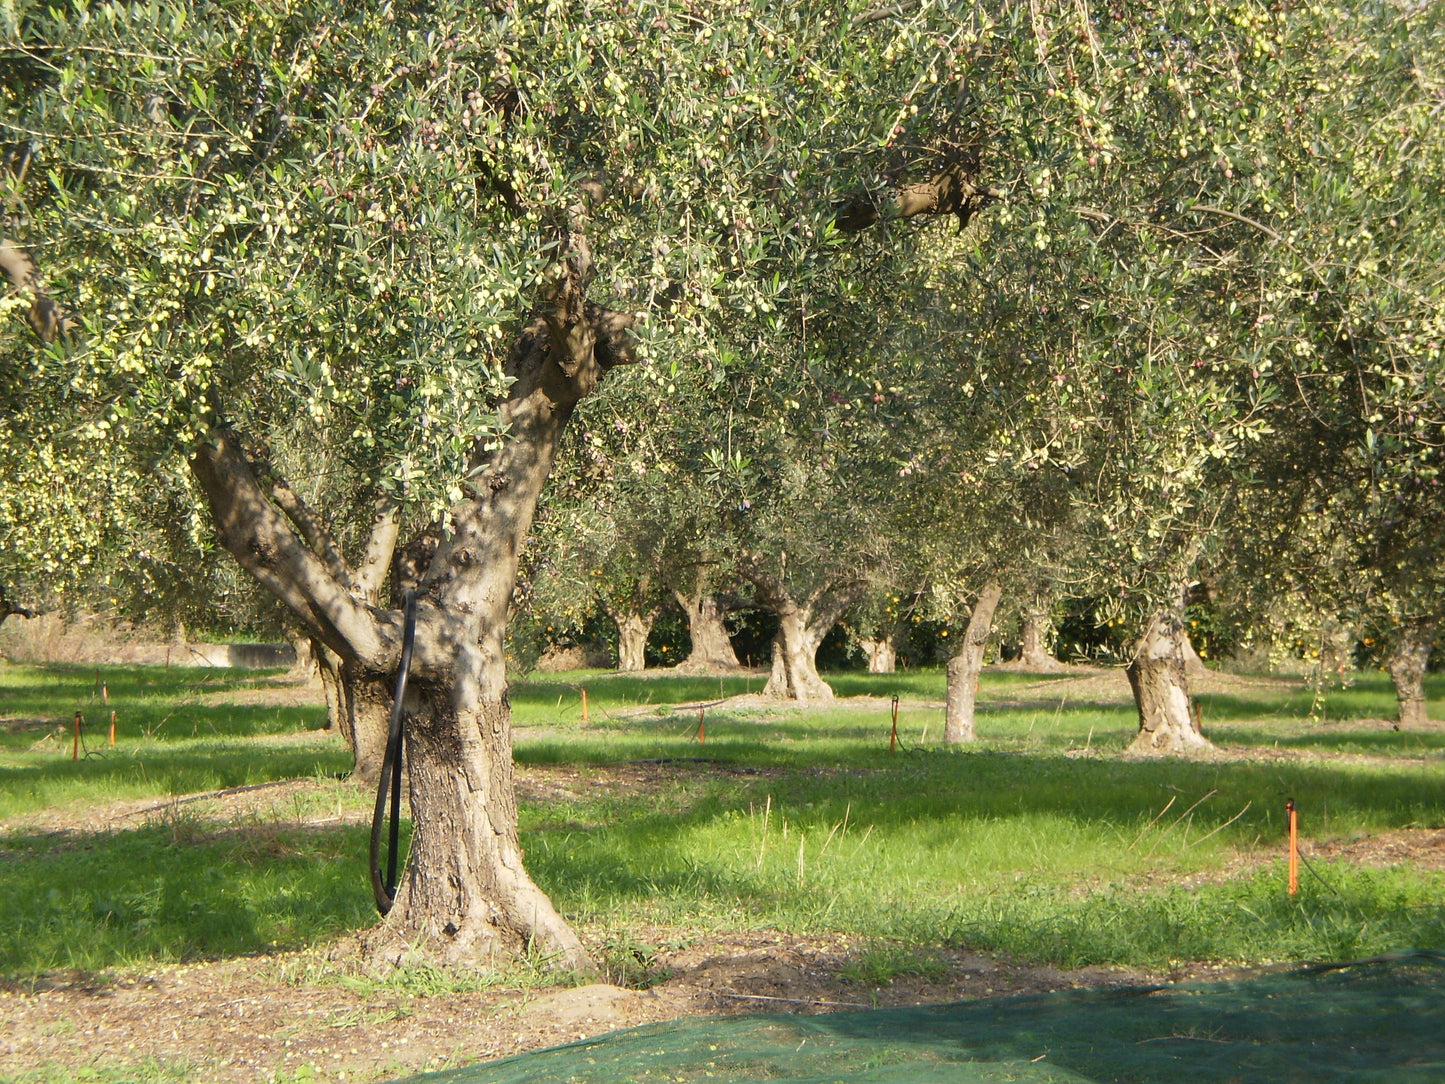 Laconiko - Laconiko Ultra Premium 100% Extra Virgin Olive Oil (375ML)